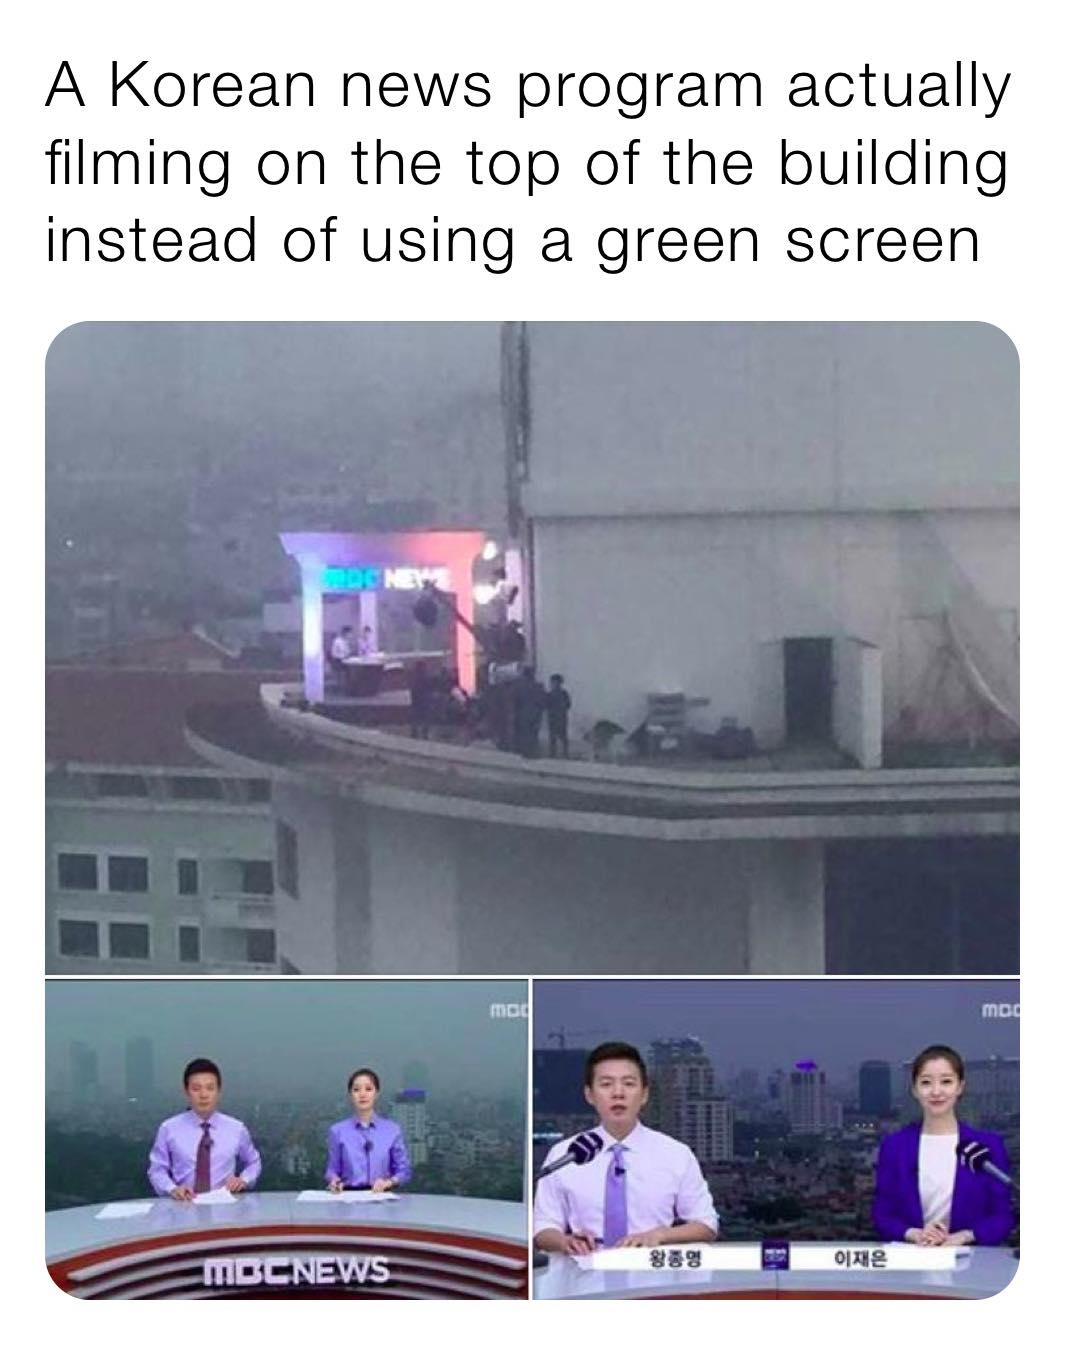 korean news actually filming on top - A Korean news program actually filming on the top of the building instead of using a green screen Zonee mo mod Mbcnews